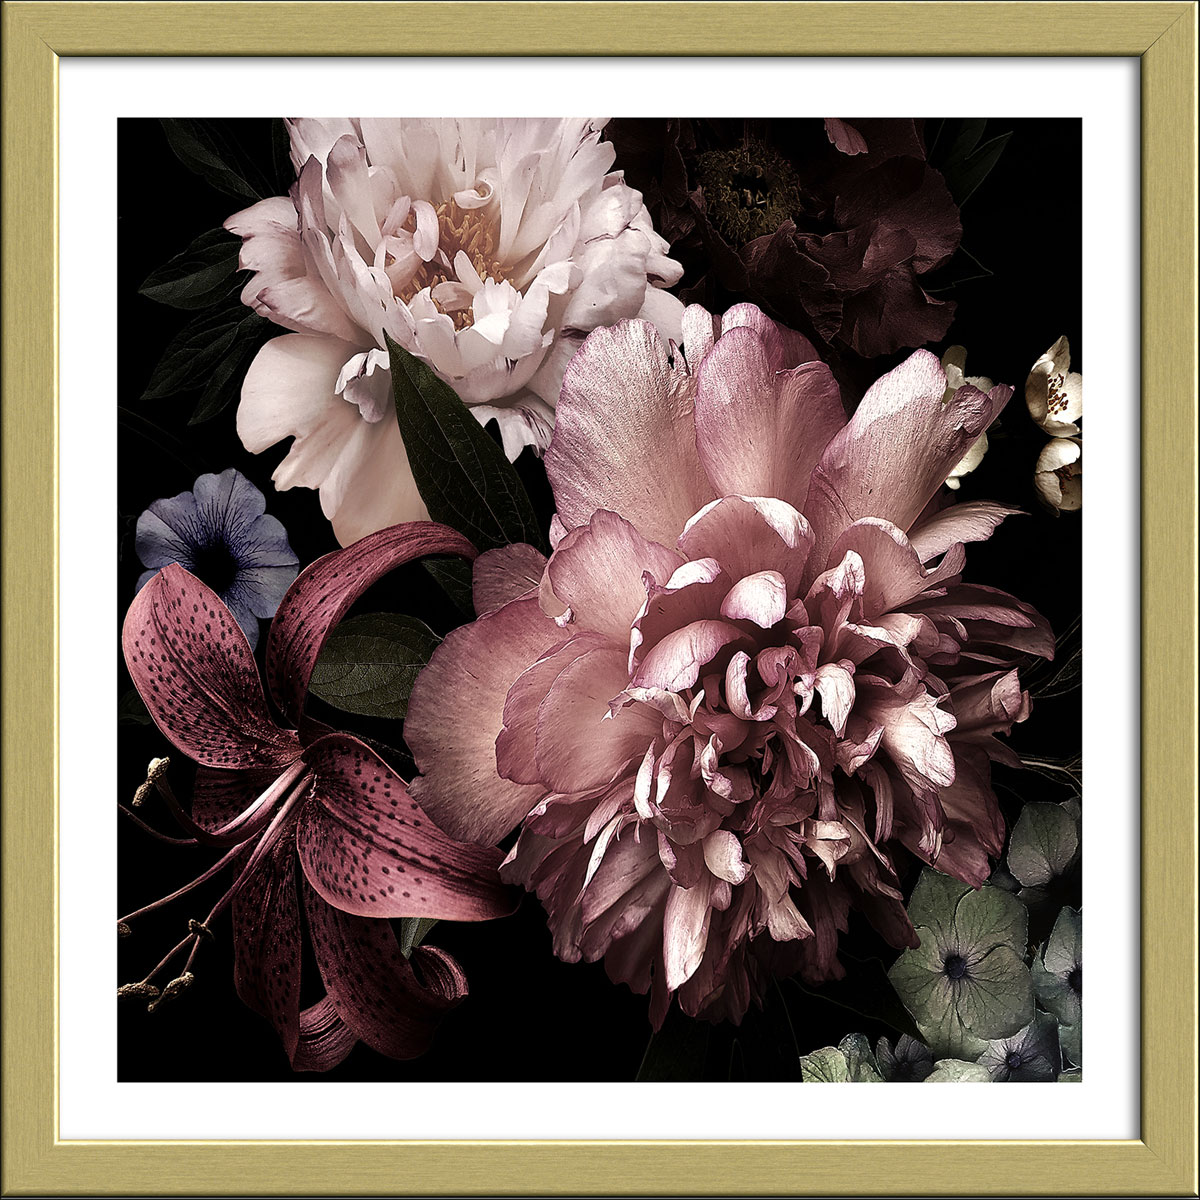 Framed-Art, Beautiful Roses 33x33 cm